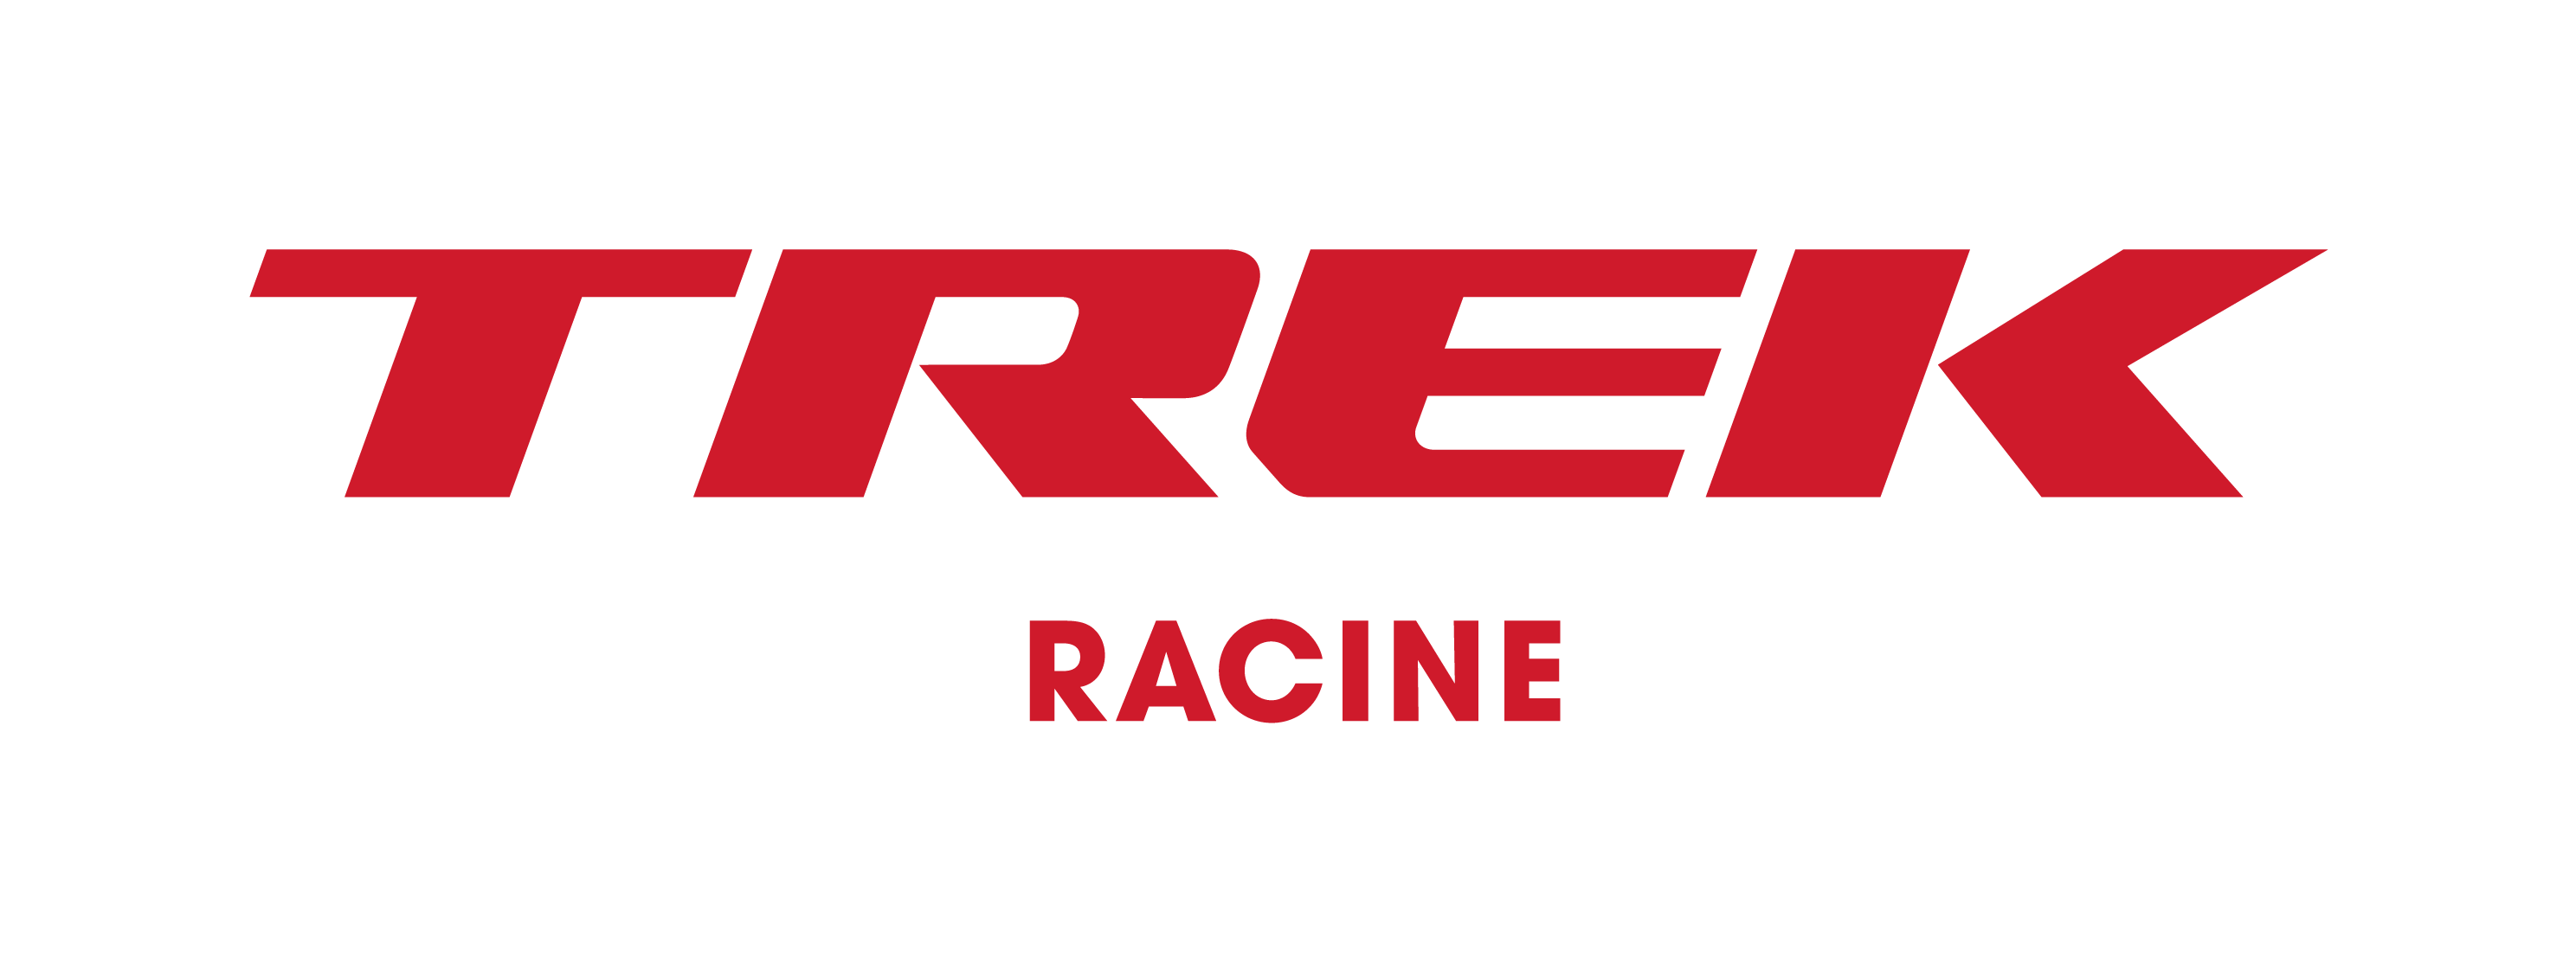 Trek Bicycle Store Racine Home Page